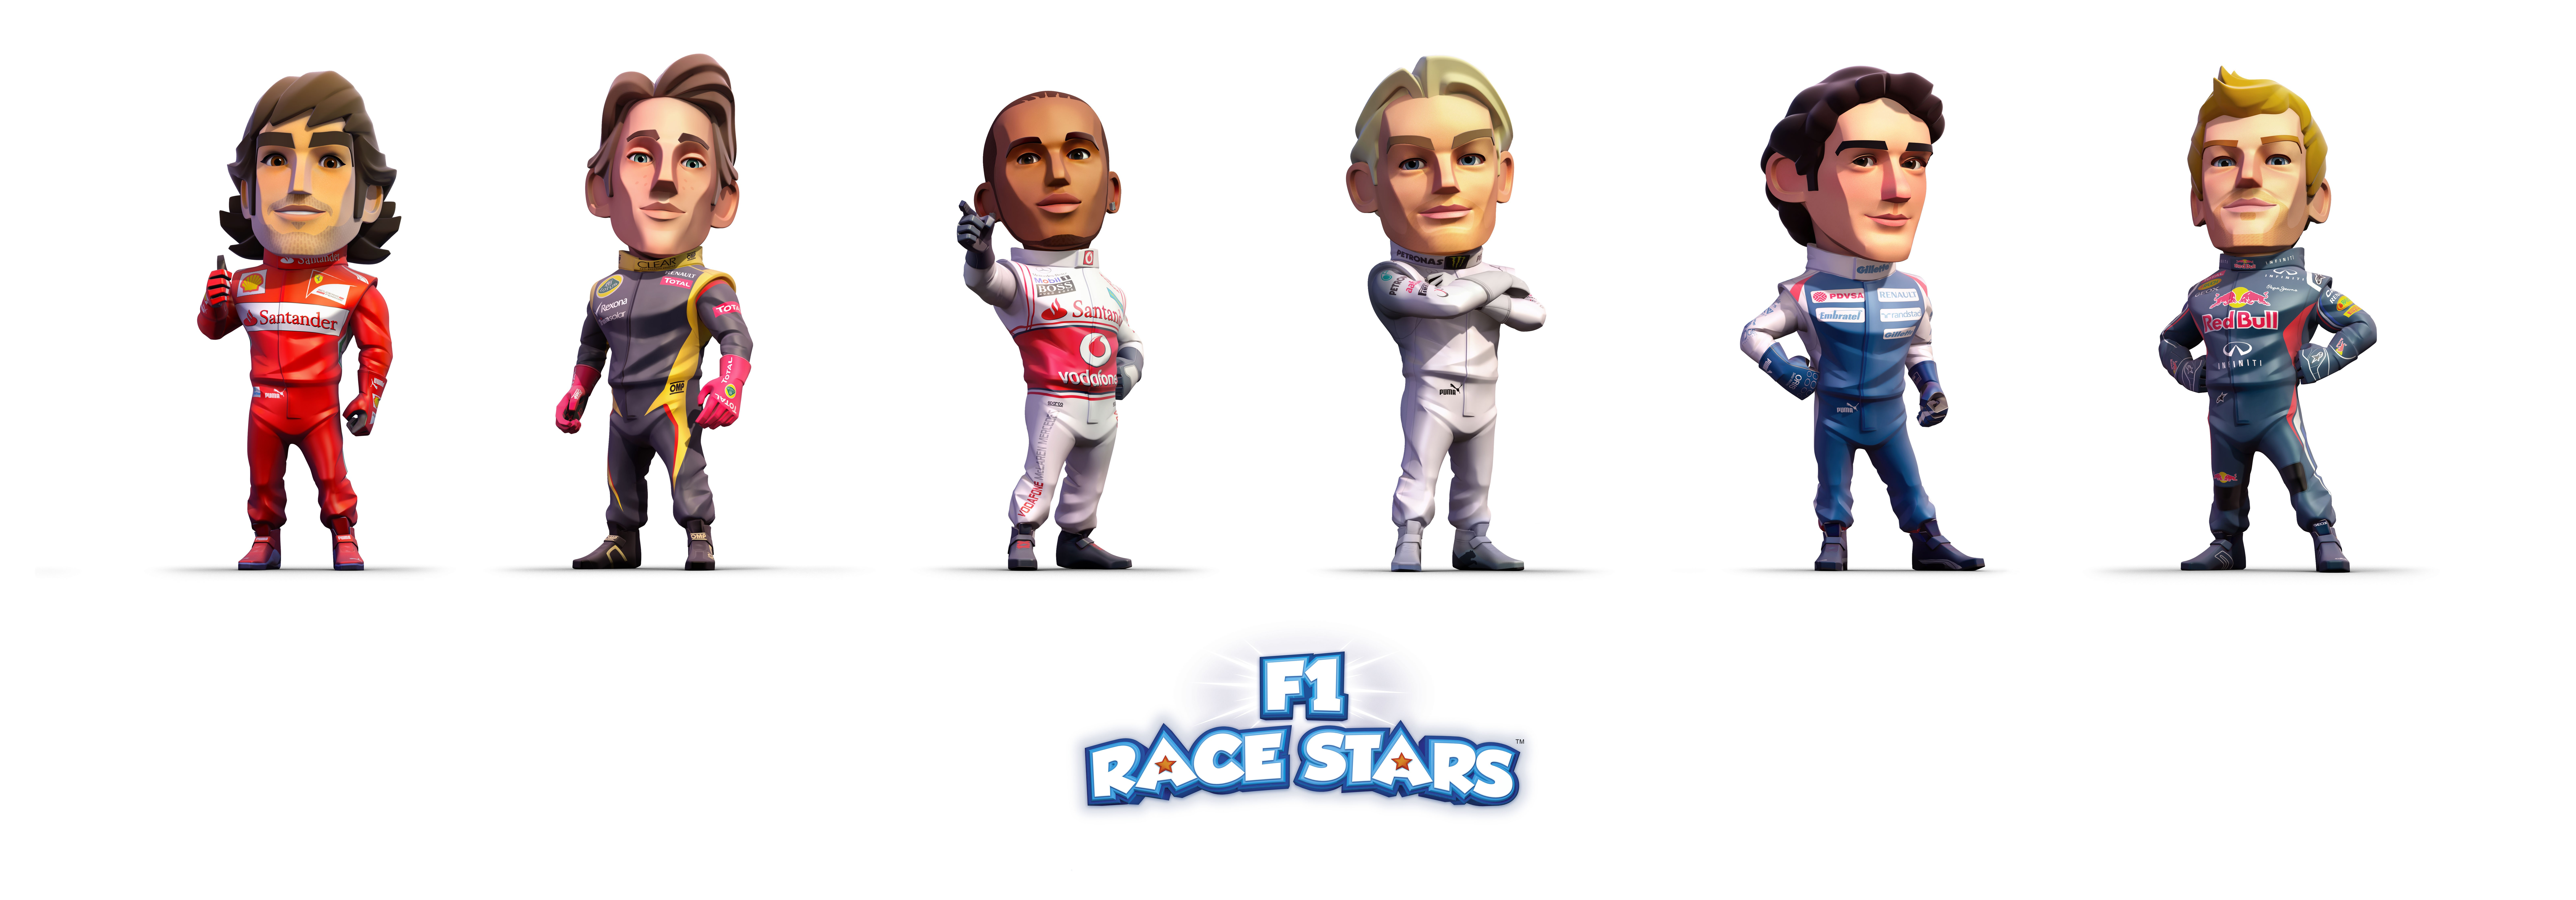 F1 Race Stars: